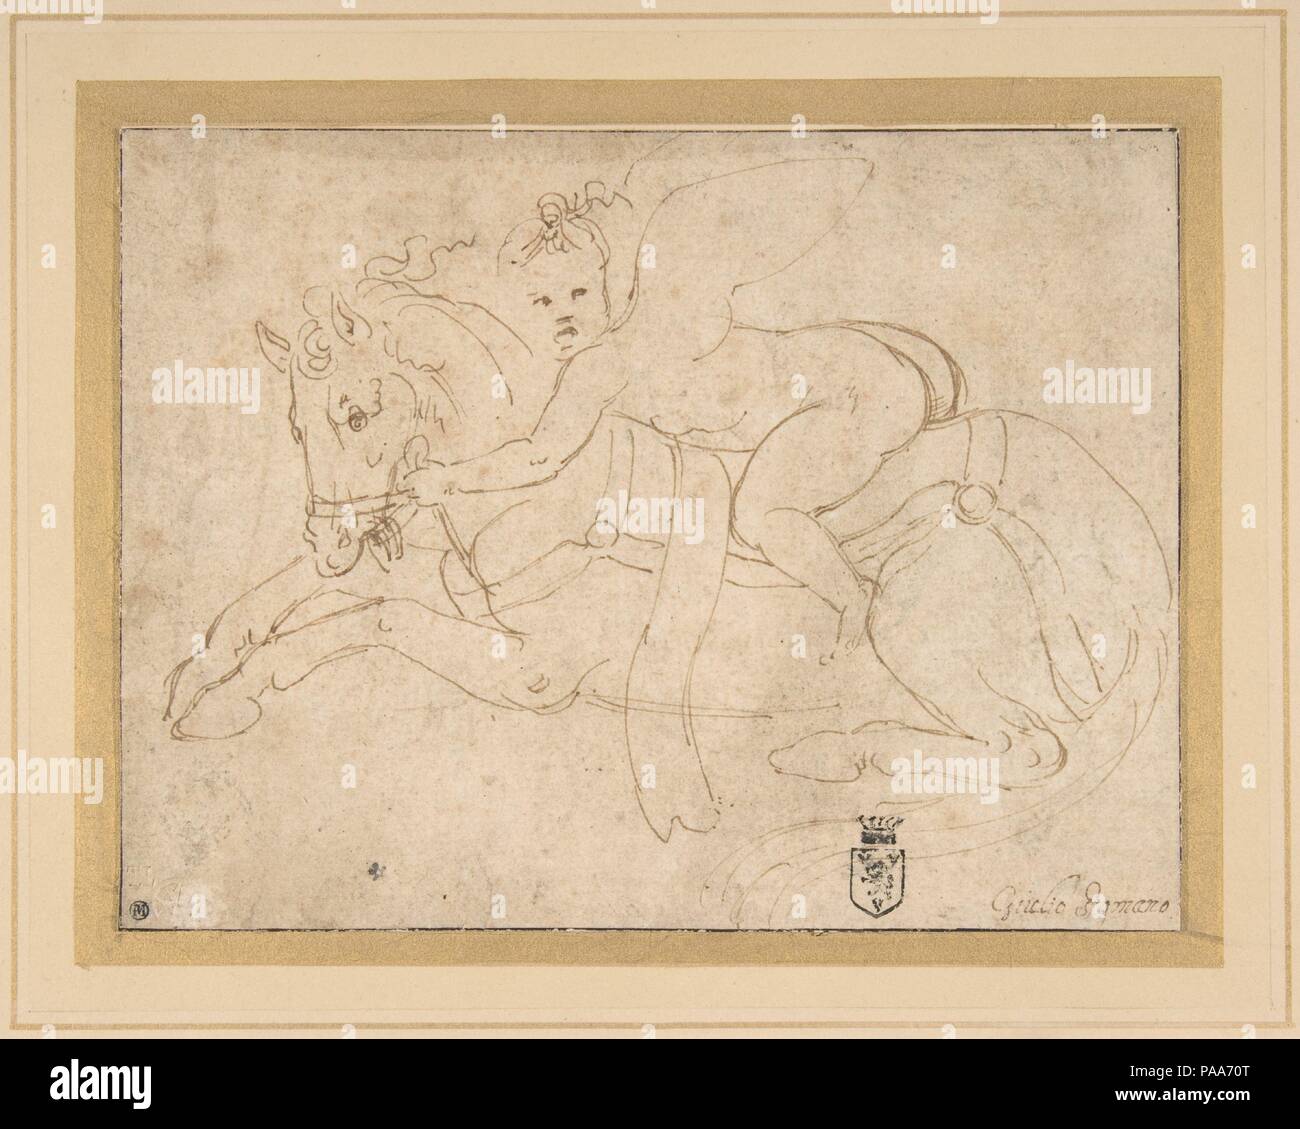 Winged Infant Riding a Crouching Horse. Artist: Giulio Romano (Italian, Rome 1499?-1546 Mantua). Dimensions: sheet: 4 13/16 x 6 3/8 in. (12.2 x 16.2 cm). Date: n.d.. Museum: Metropolitan Museum of Art, New York, USA. Stock Photo